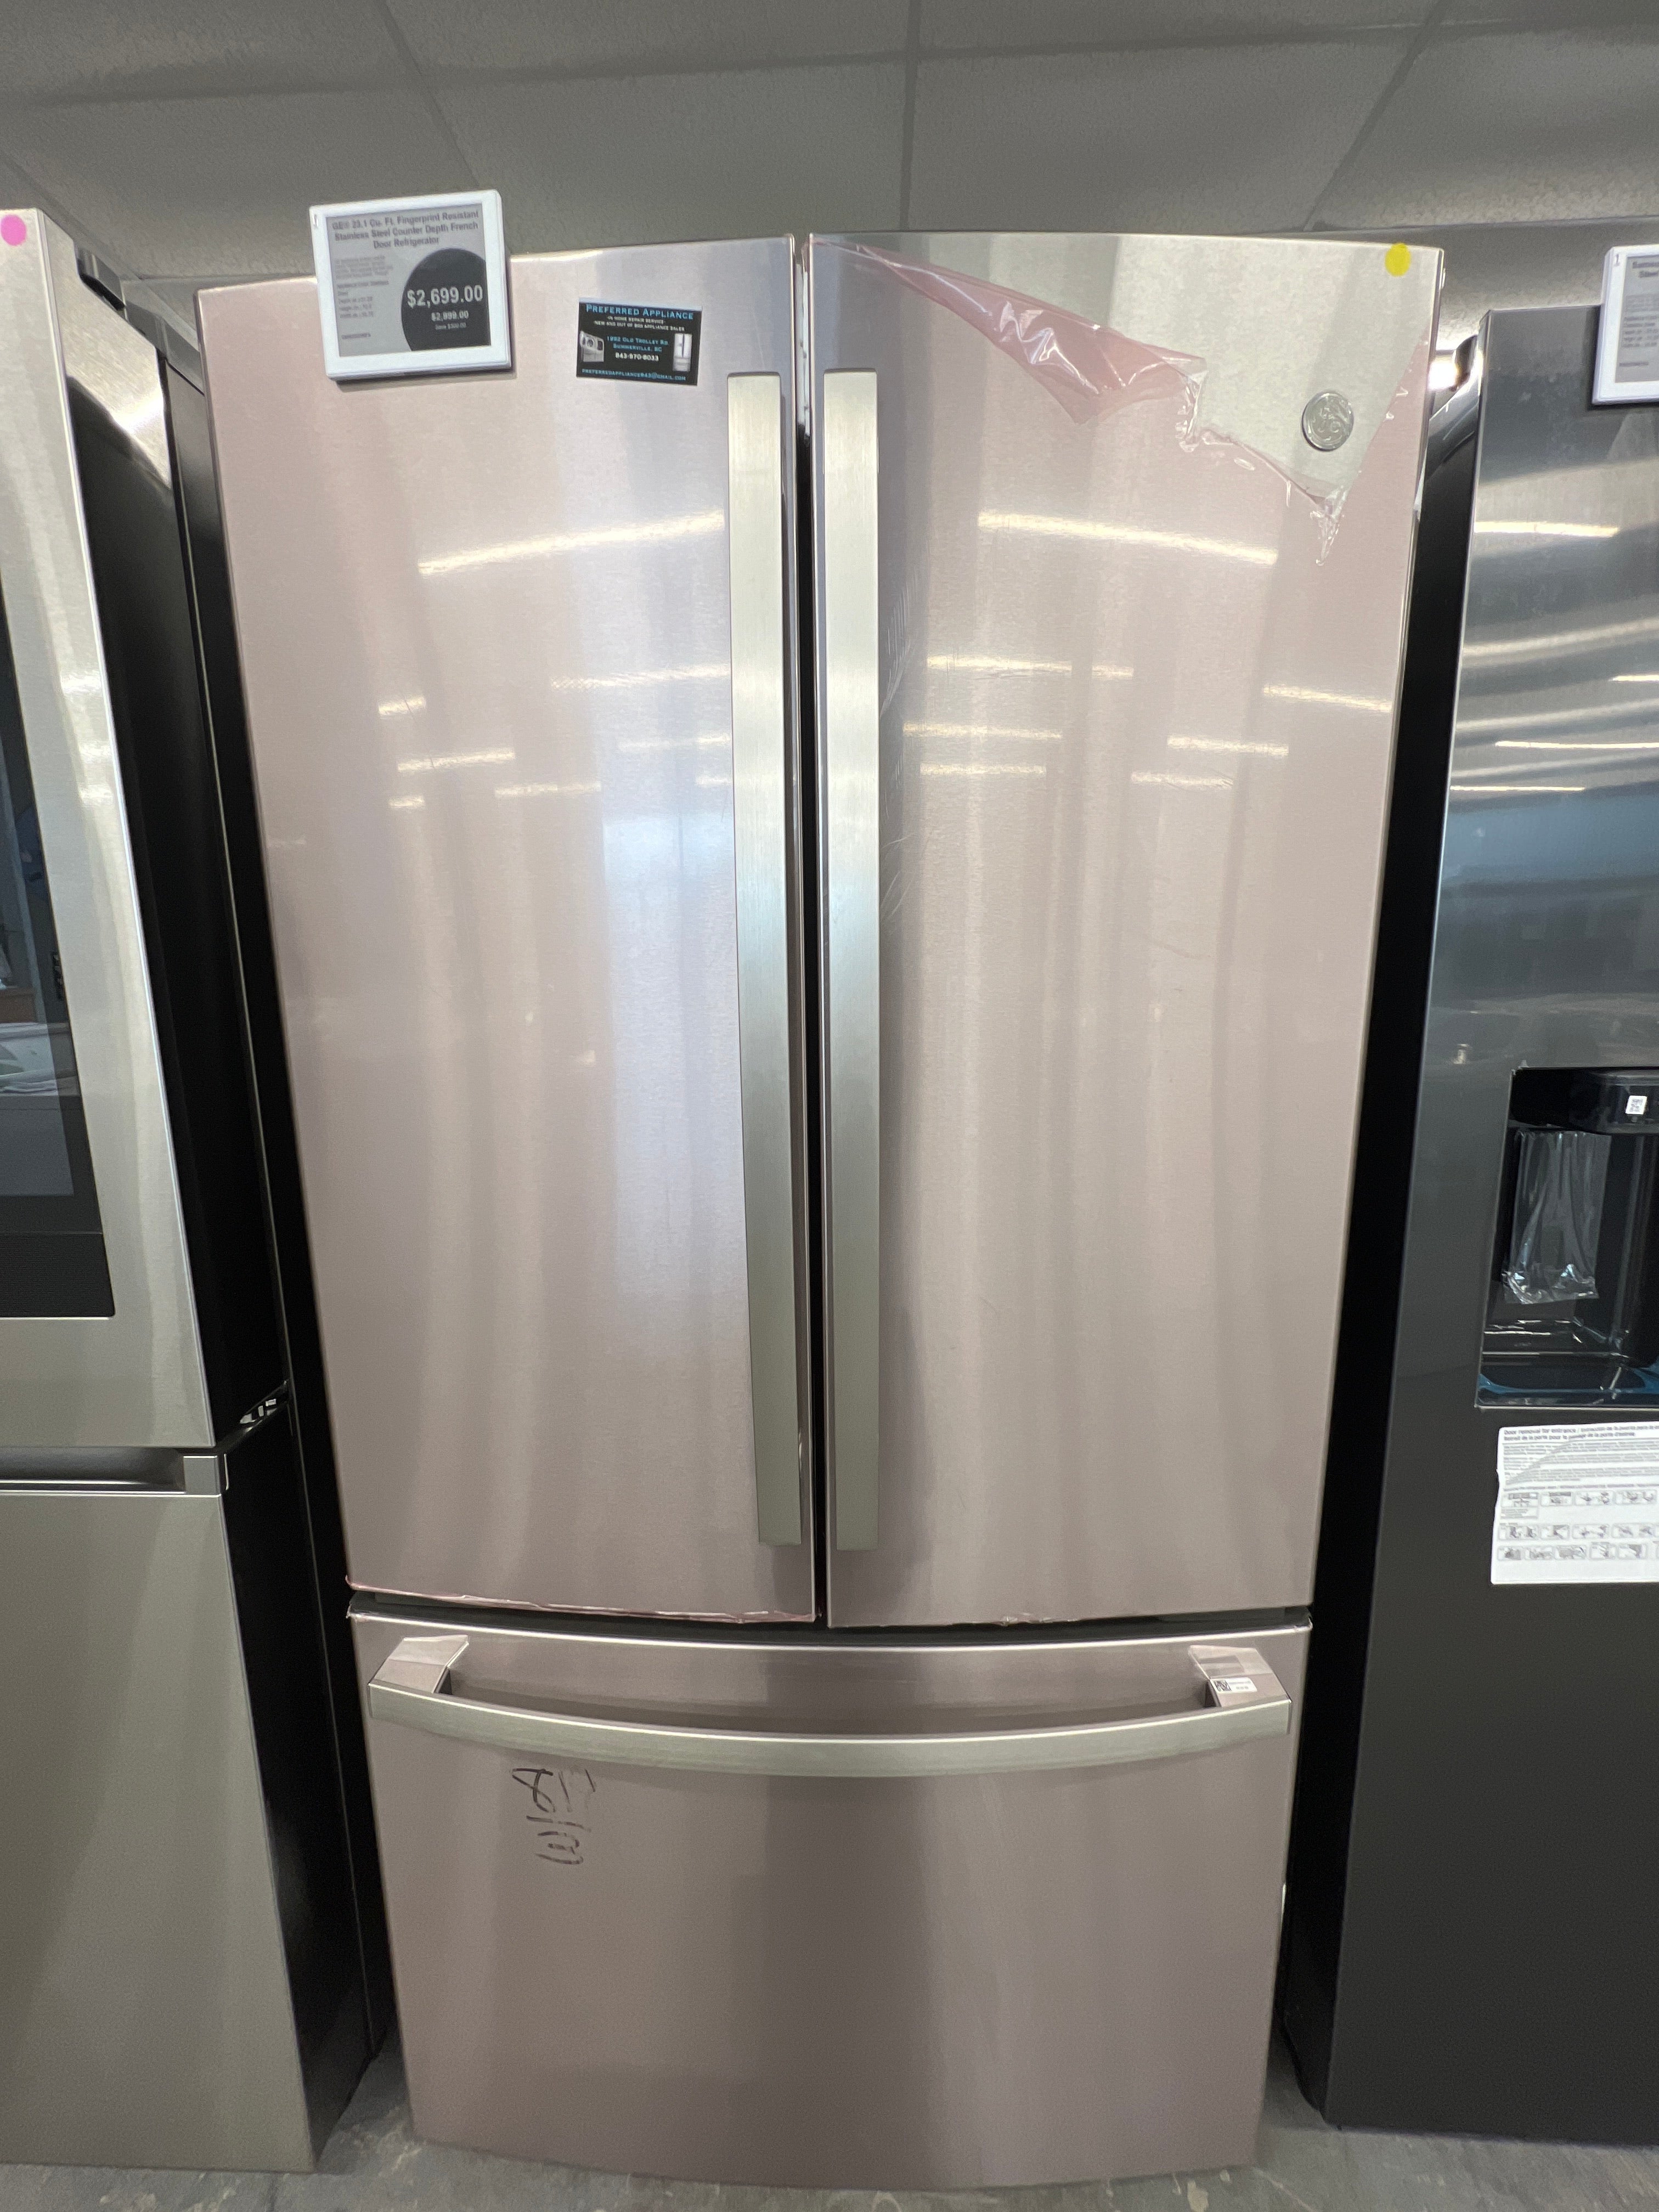 GE Profile Refrigerators - Counter Depth French Door 23.1 Cu Ft - PWE23KYNFS